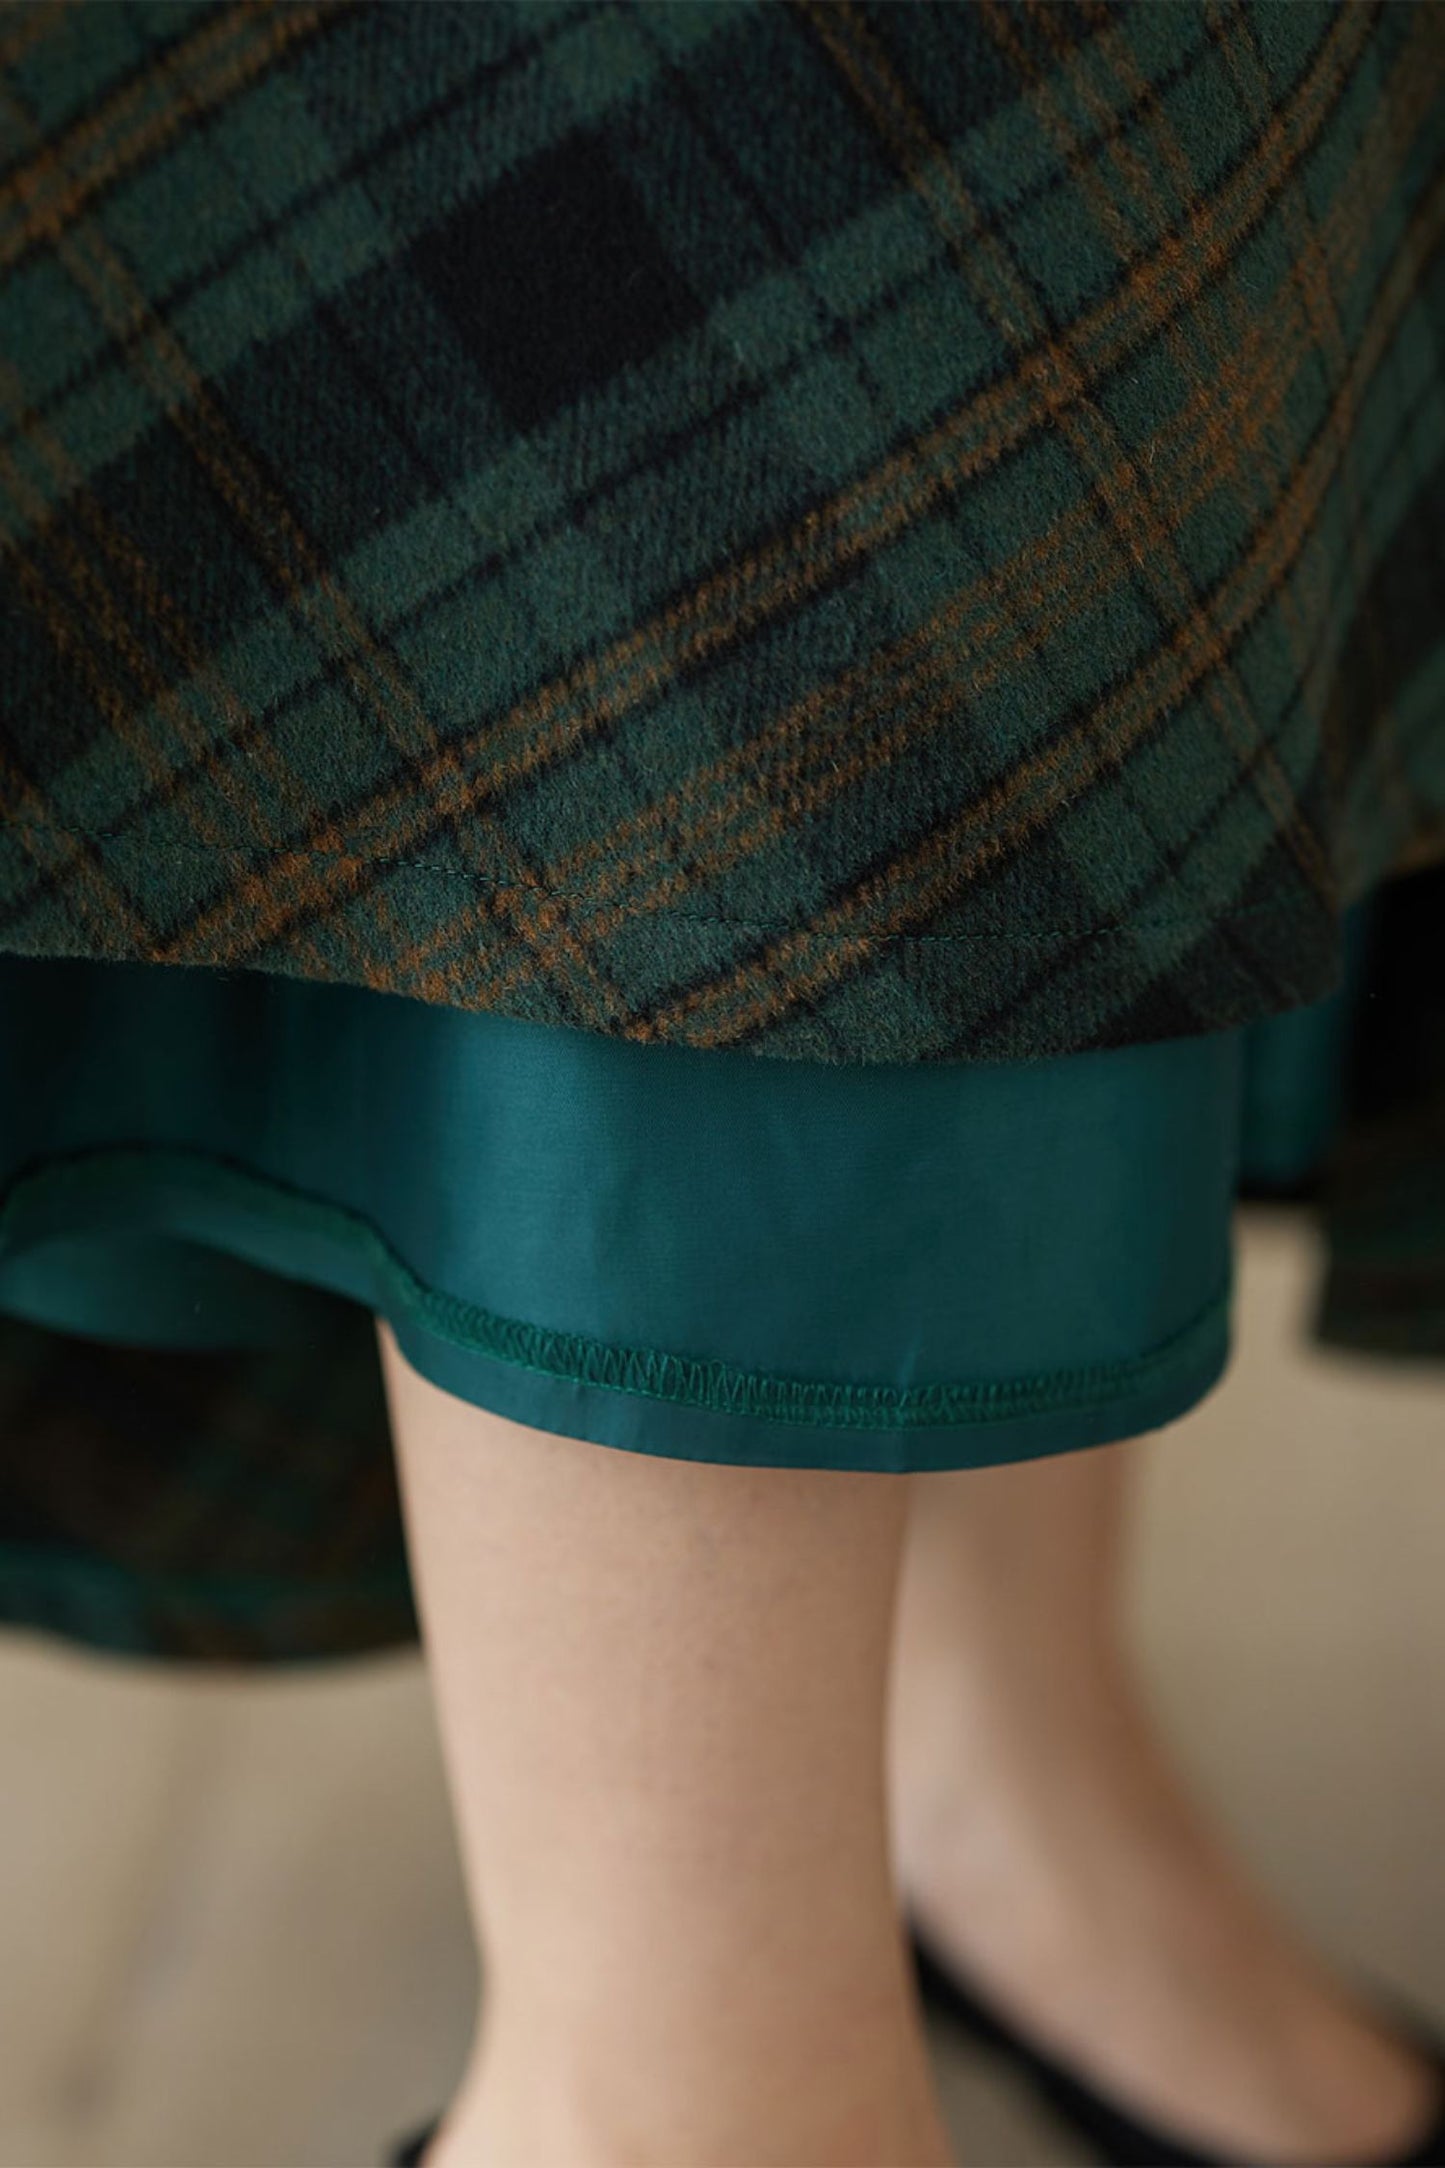 Green Maxi Wool Plaid Winter Skirt 4621